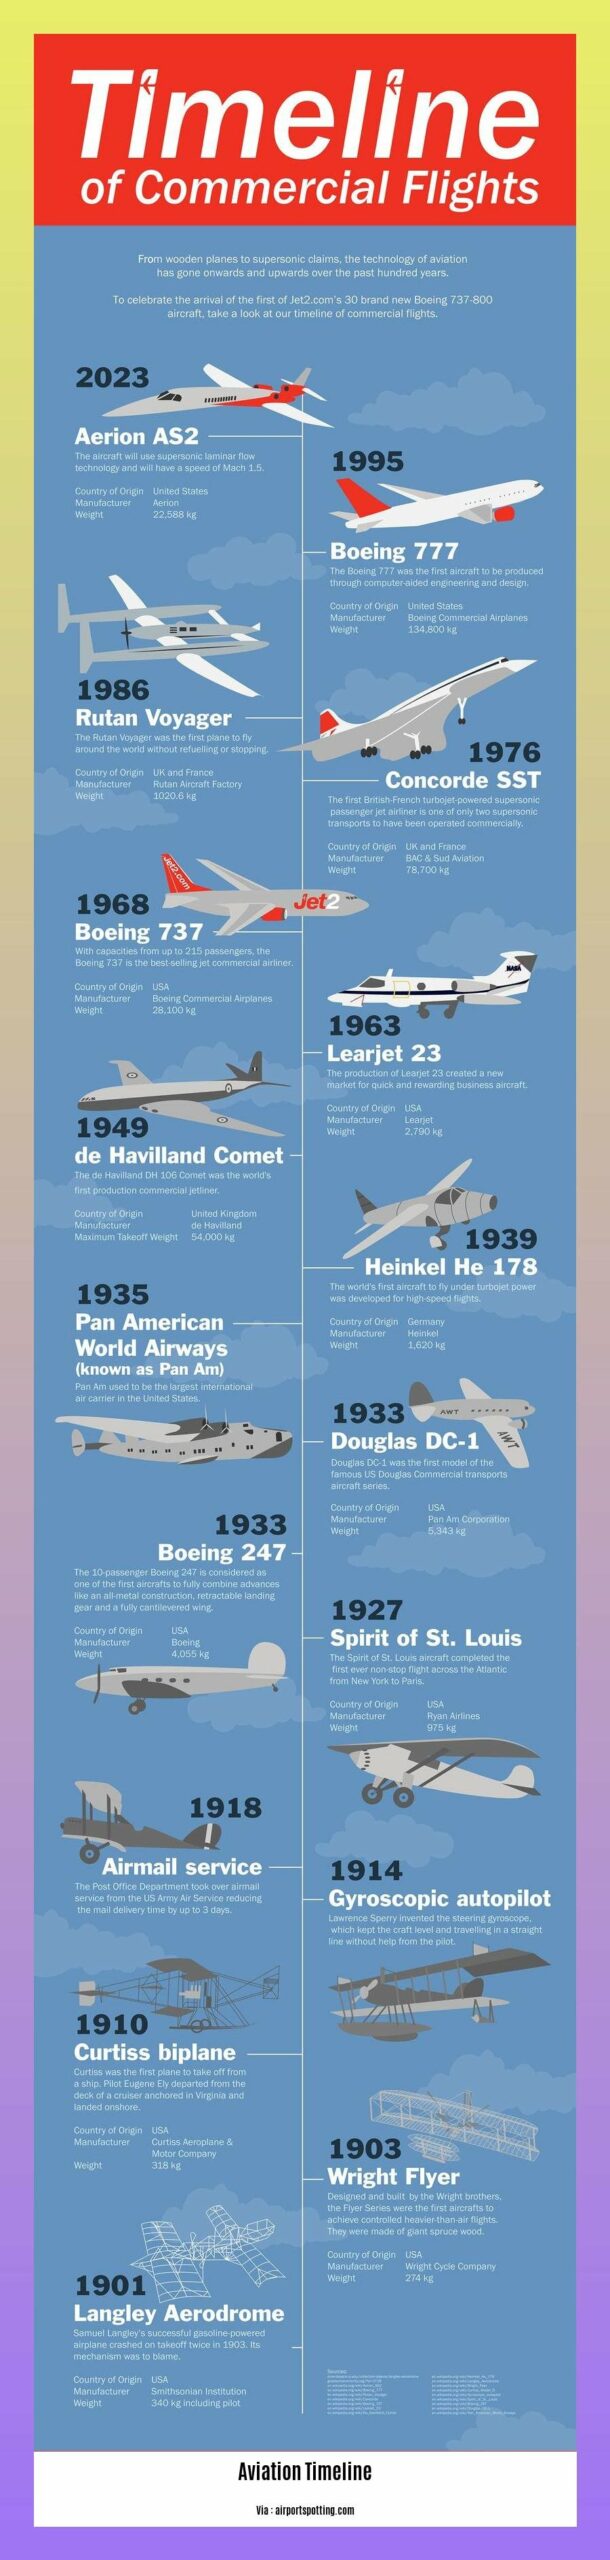 aviation timeline